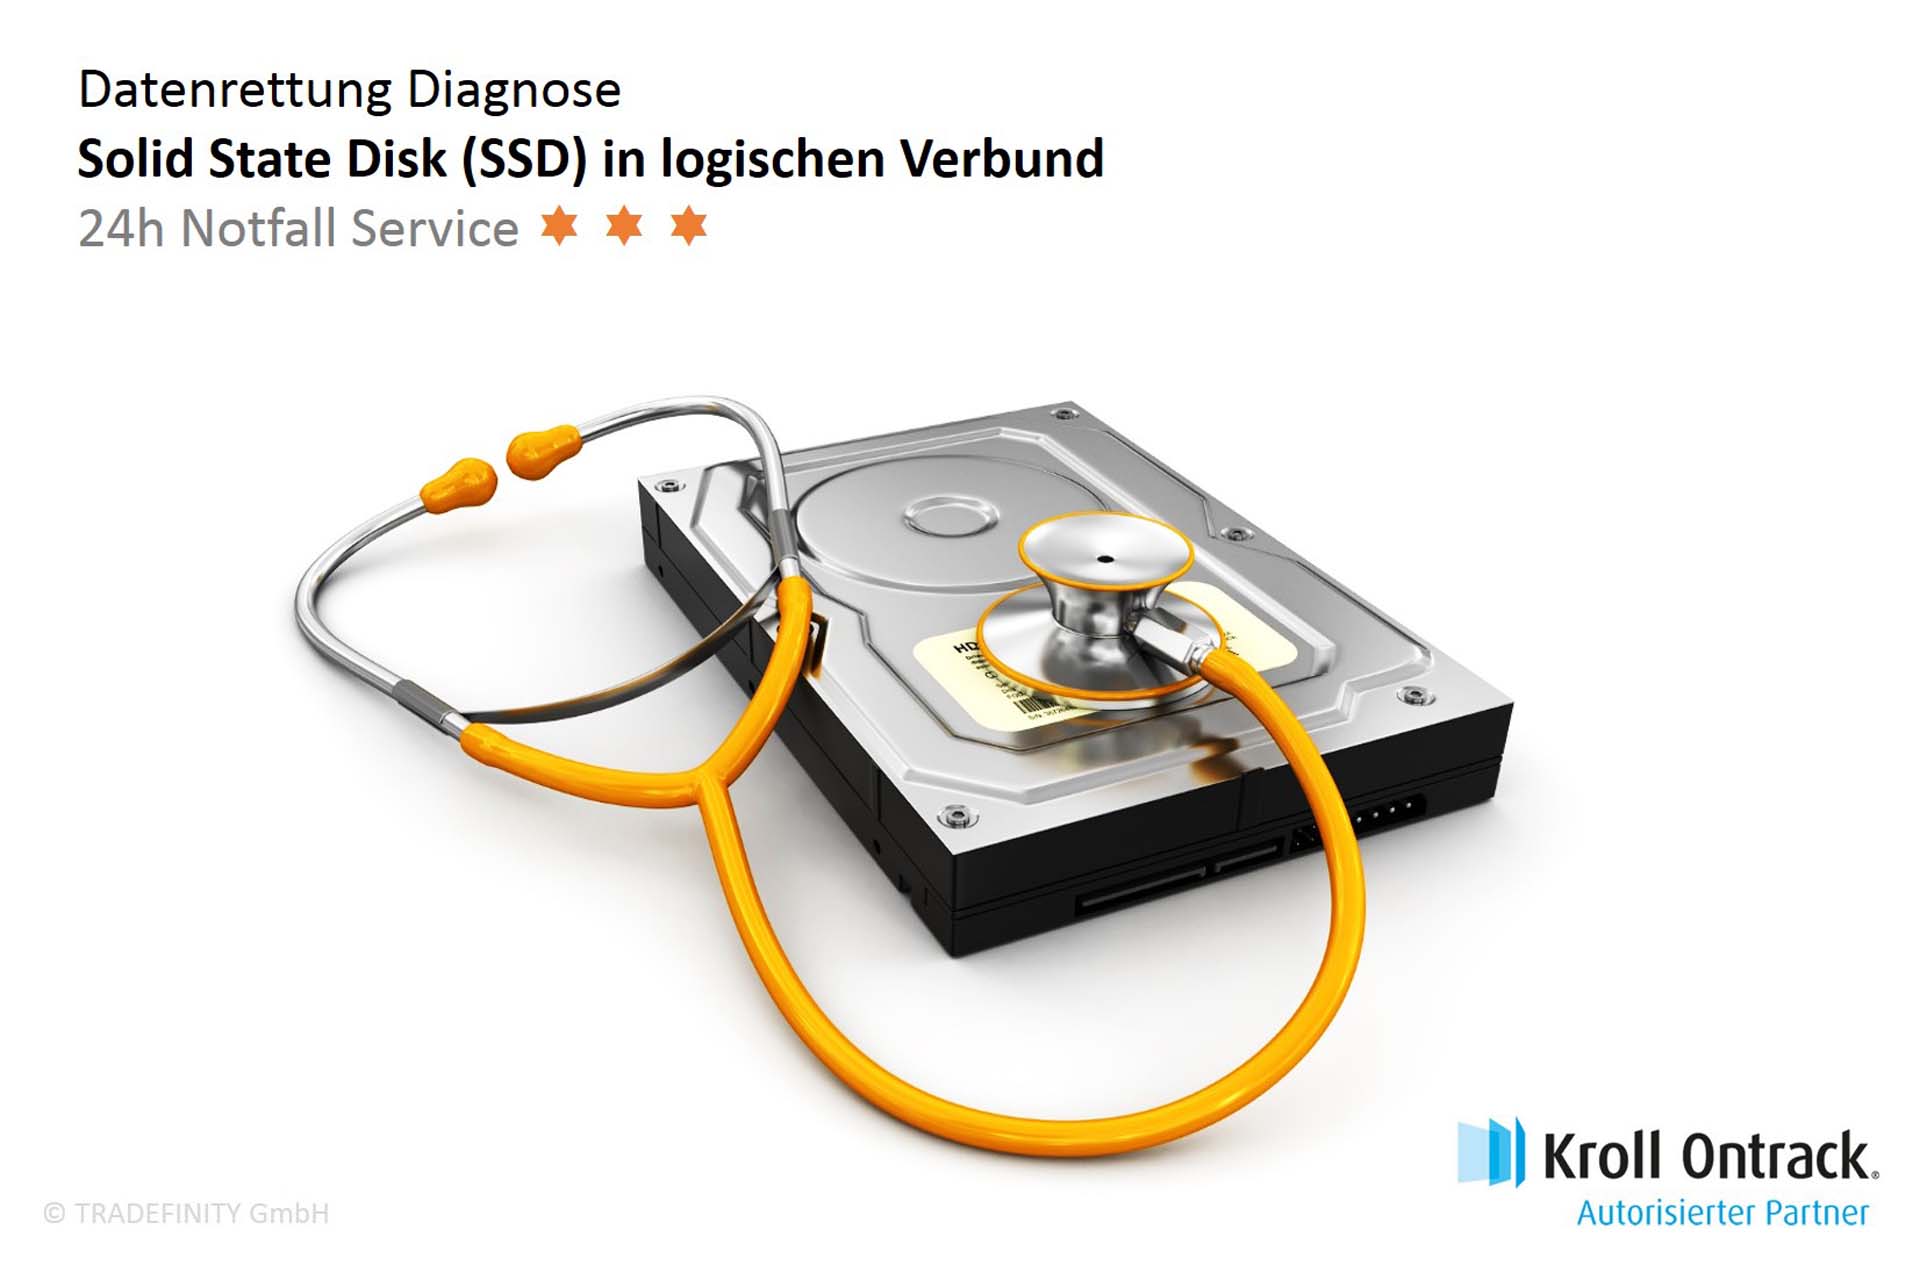 Datenrettung Diagnose (24h Notfall Service) von SSD (Verbund)